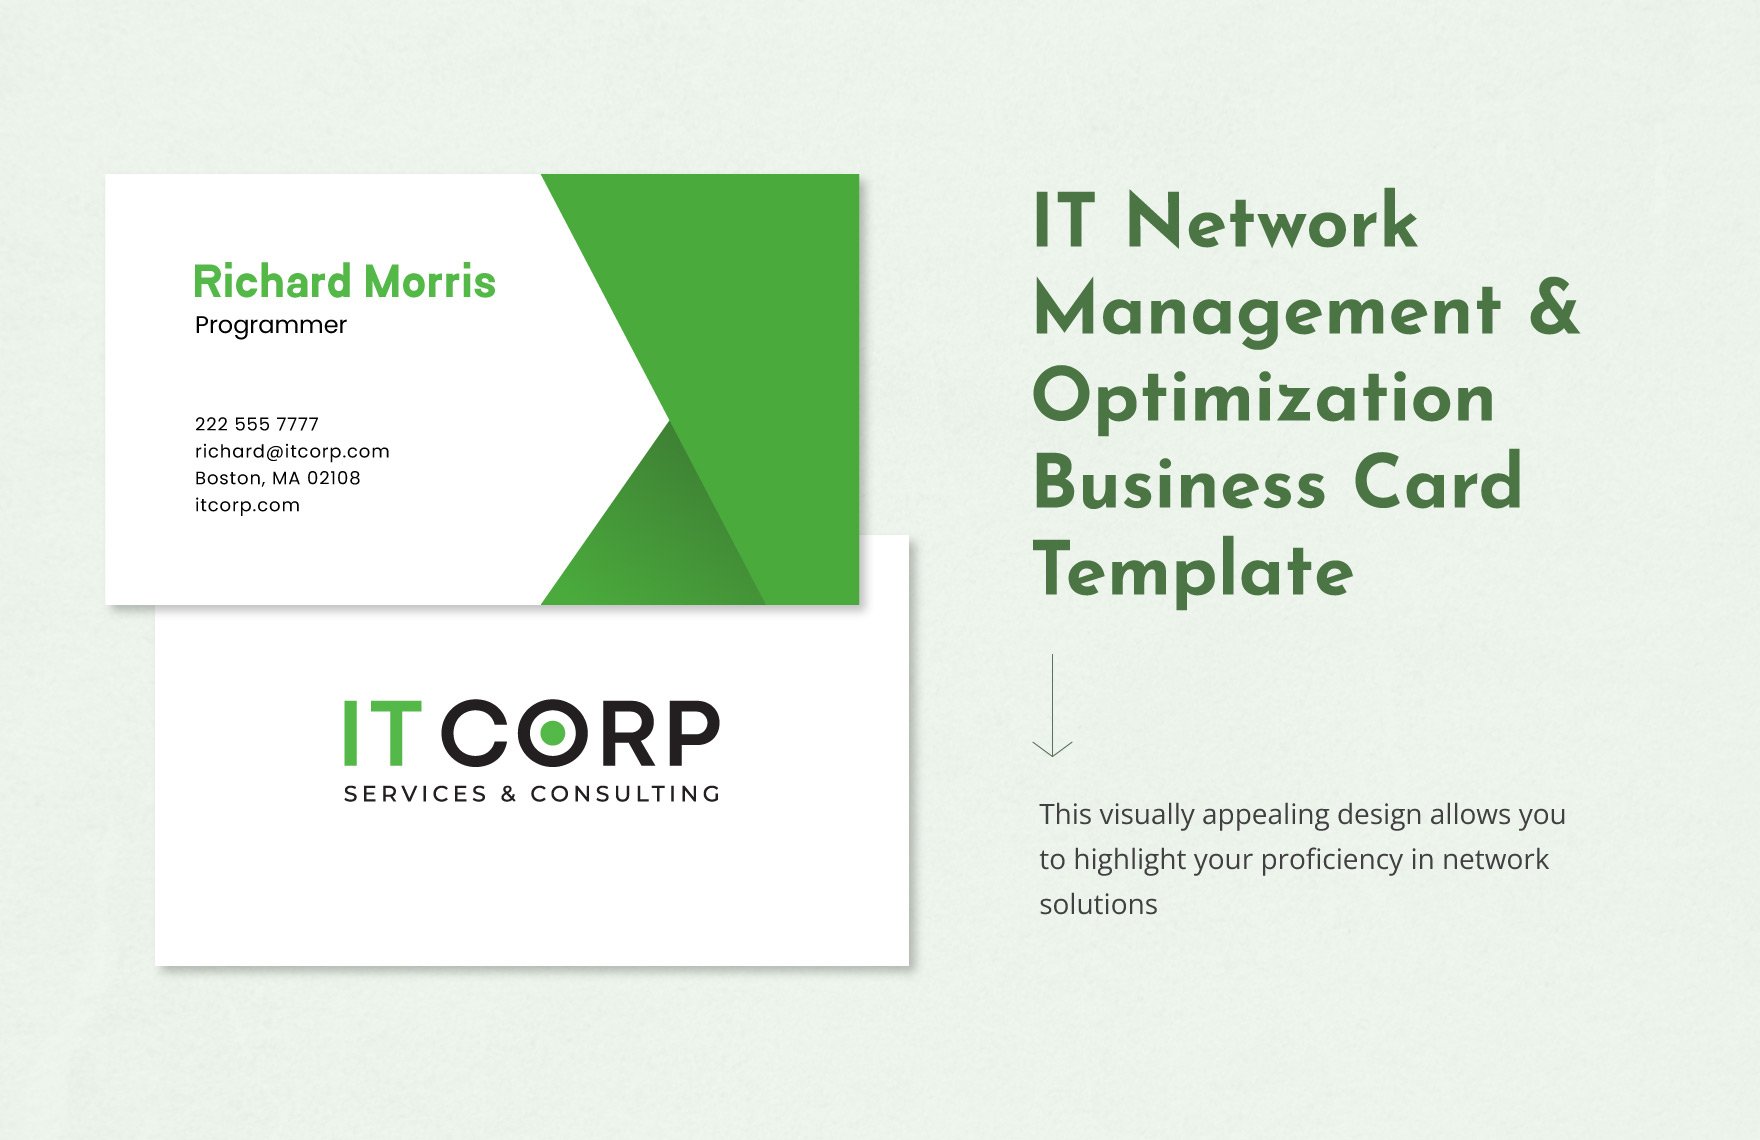 IT Network Management & Optimization Business Card Template